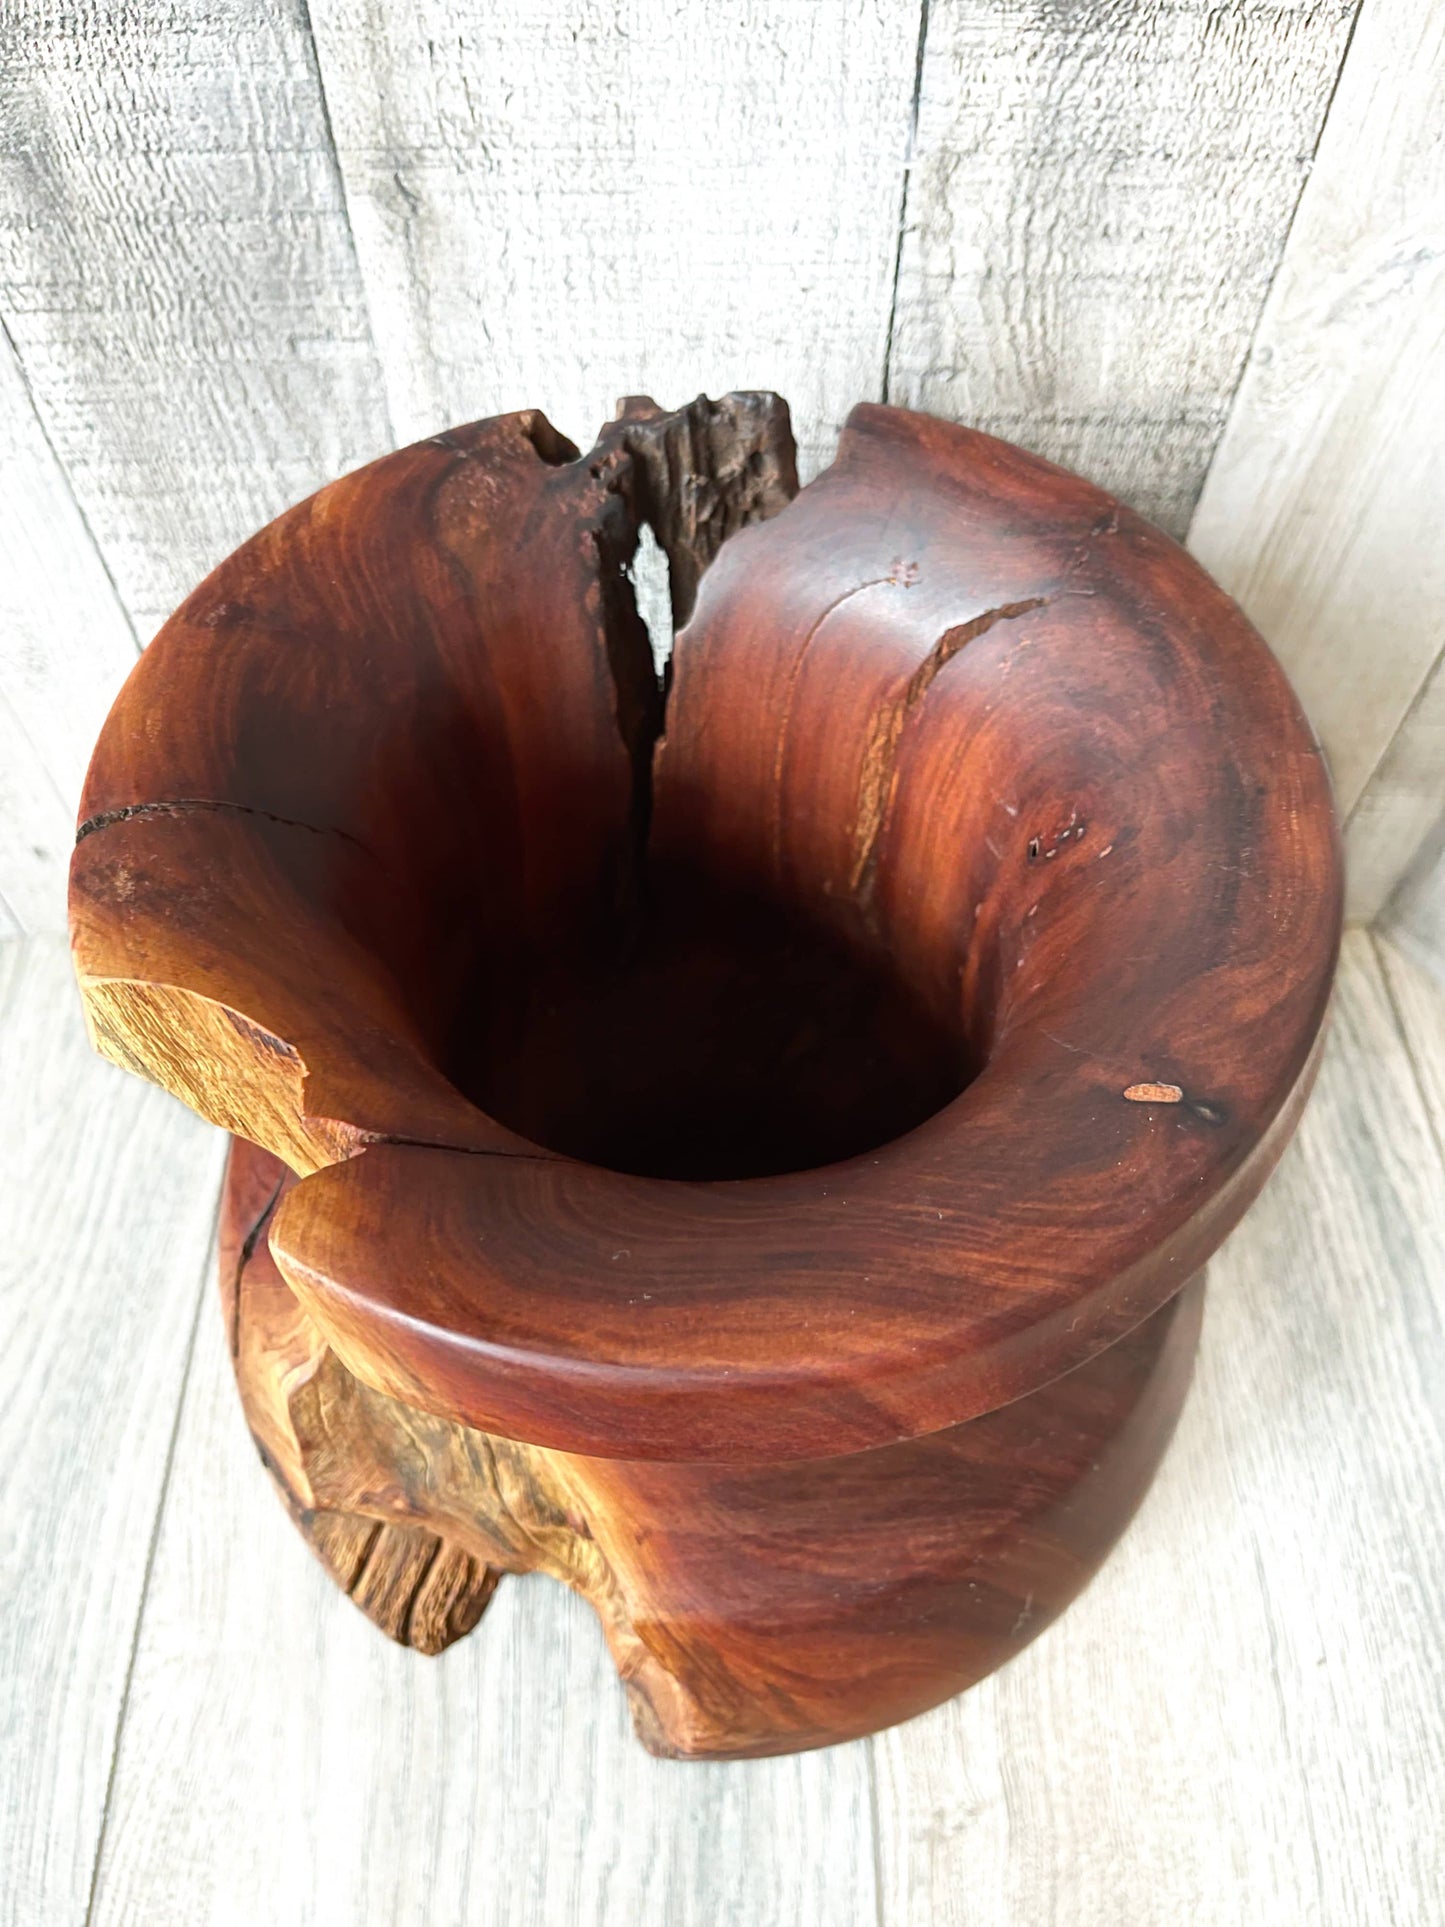 Unique Manzanita wood vases with natural edges. 9" diameter x 10" tall